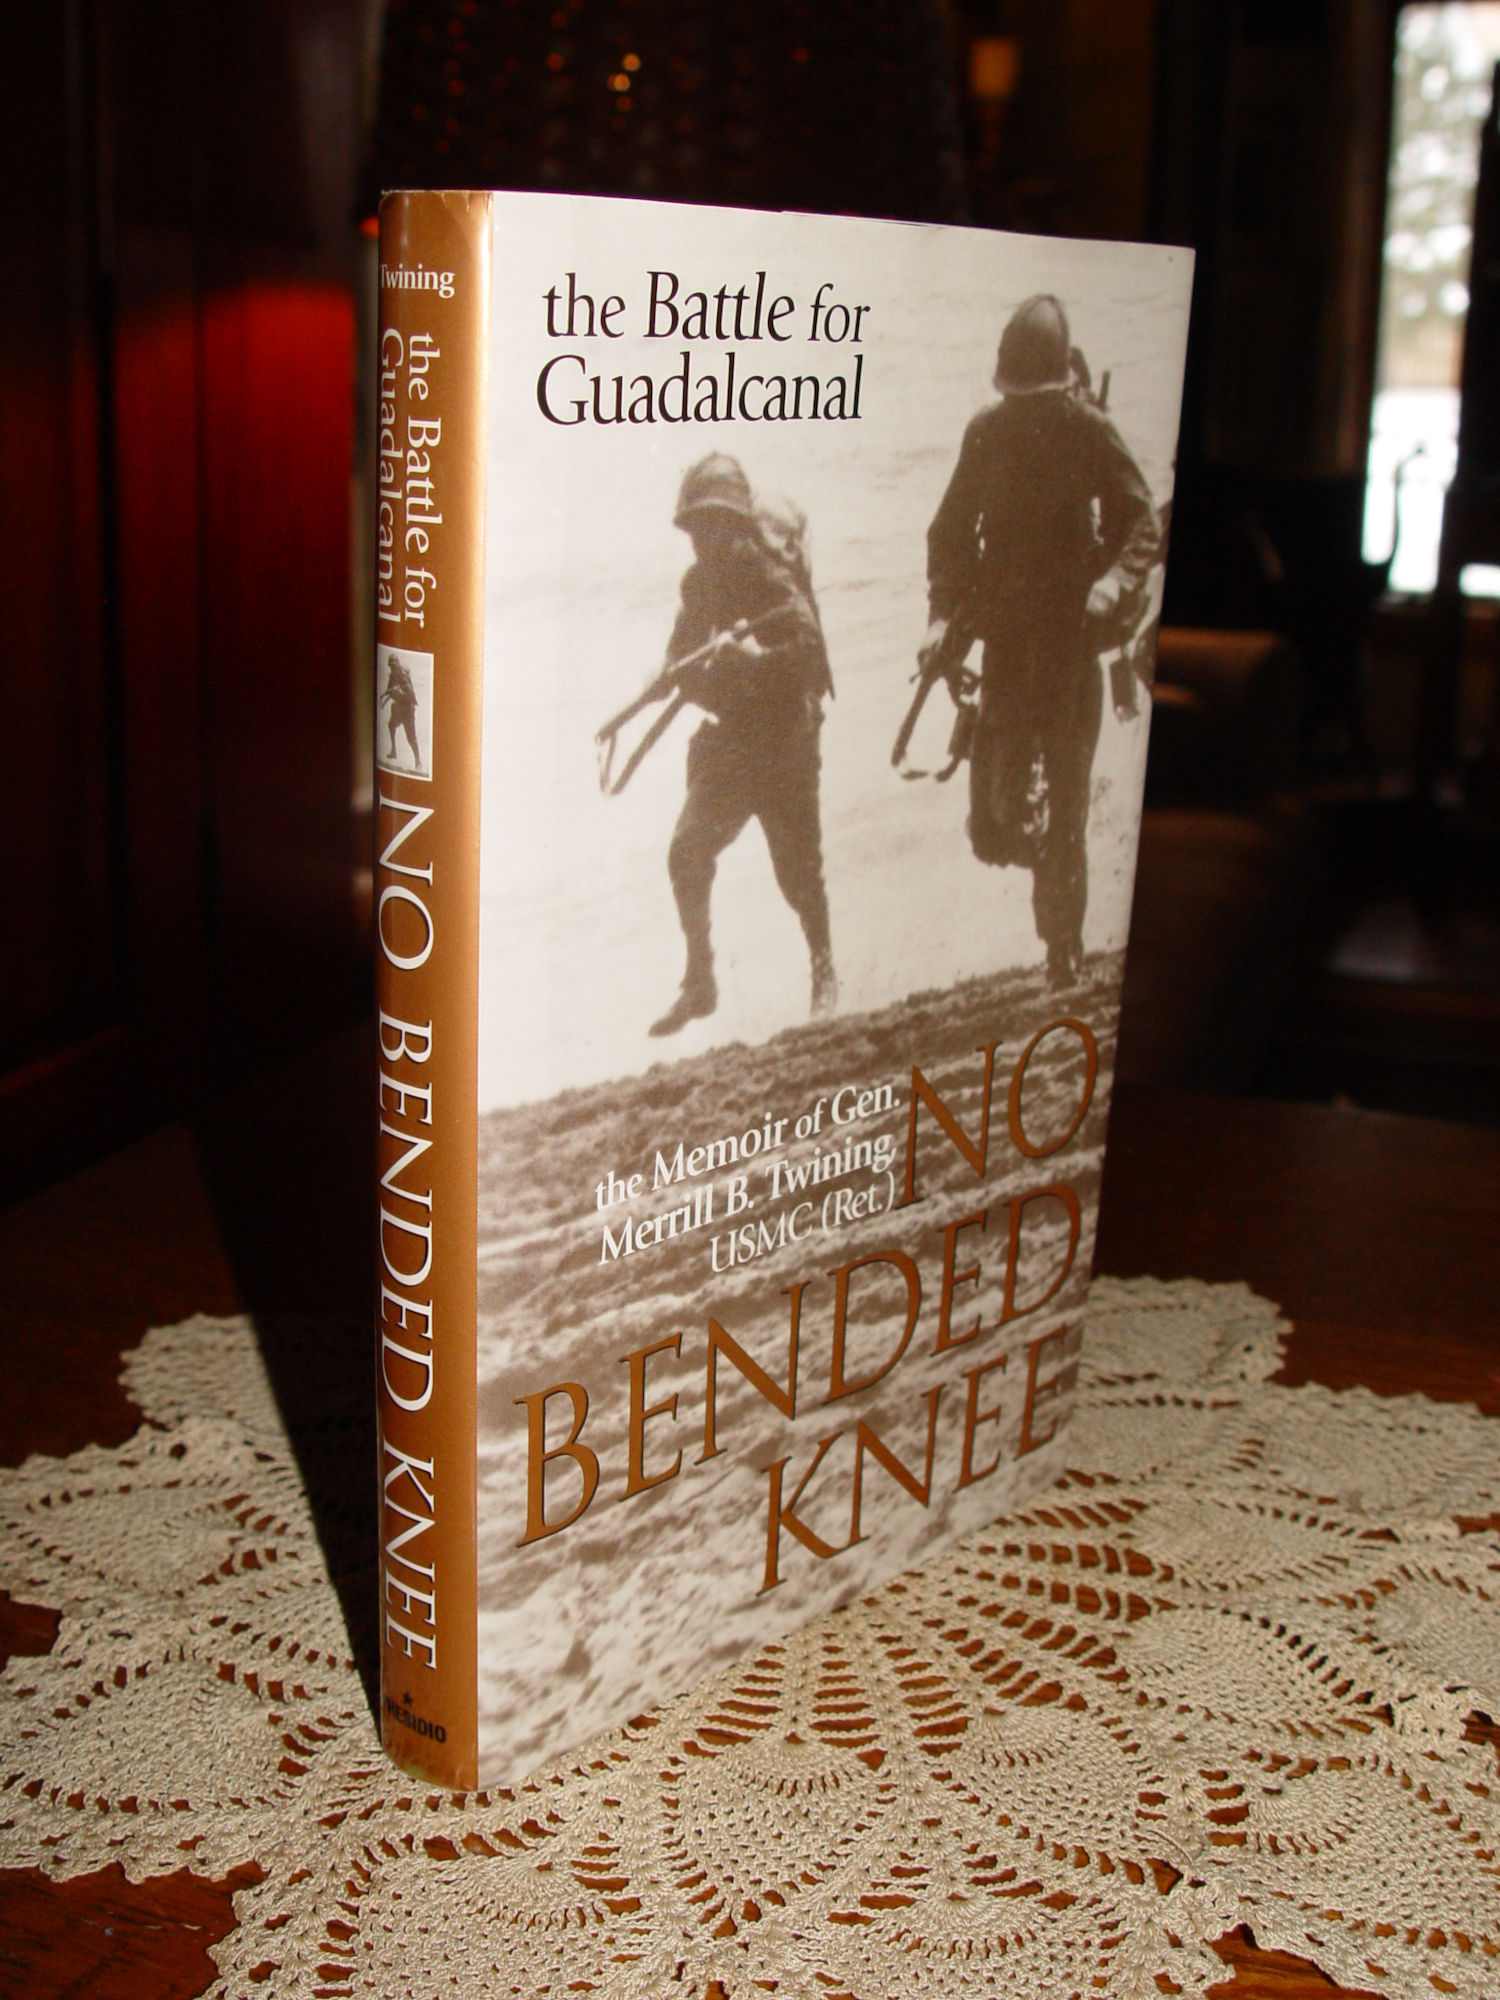 No Bended Knee:
                        The Battle for Guadalcanal - the memoir of Gen.
                        Merrill B. Twining USMC